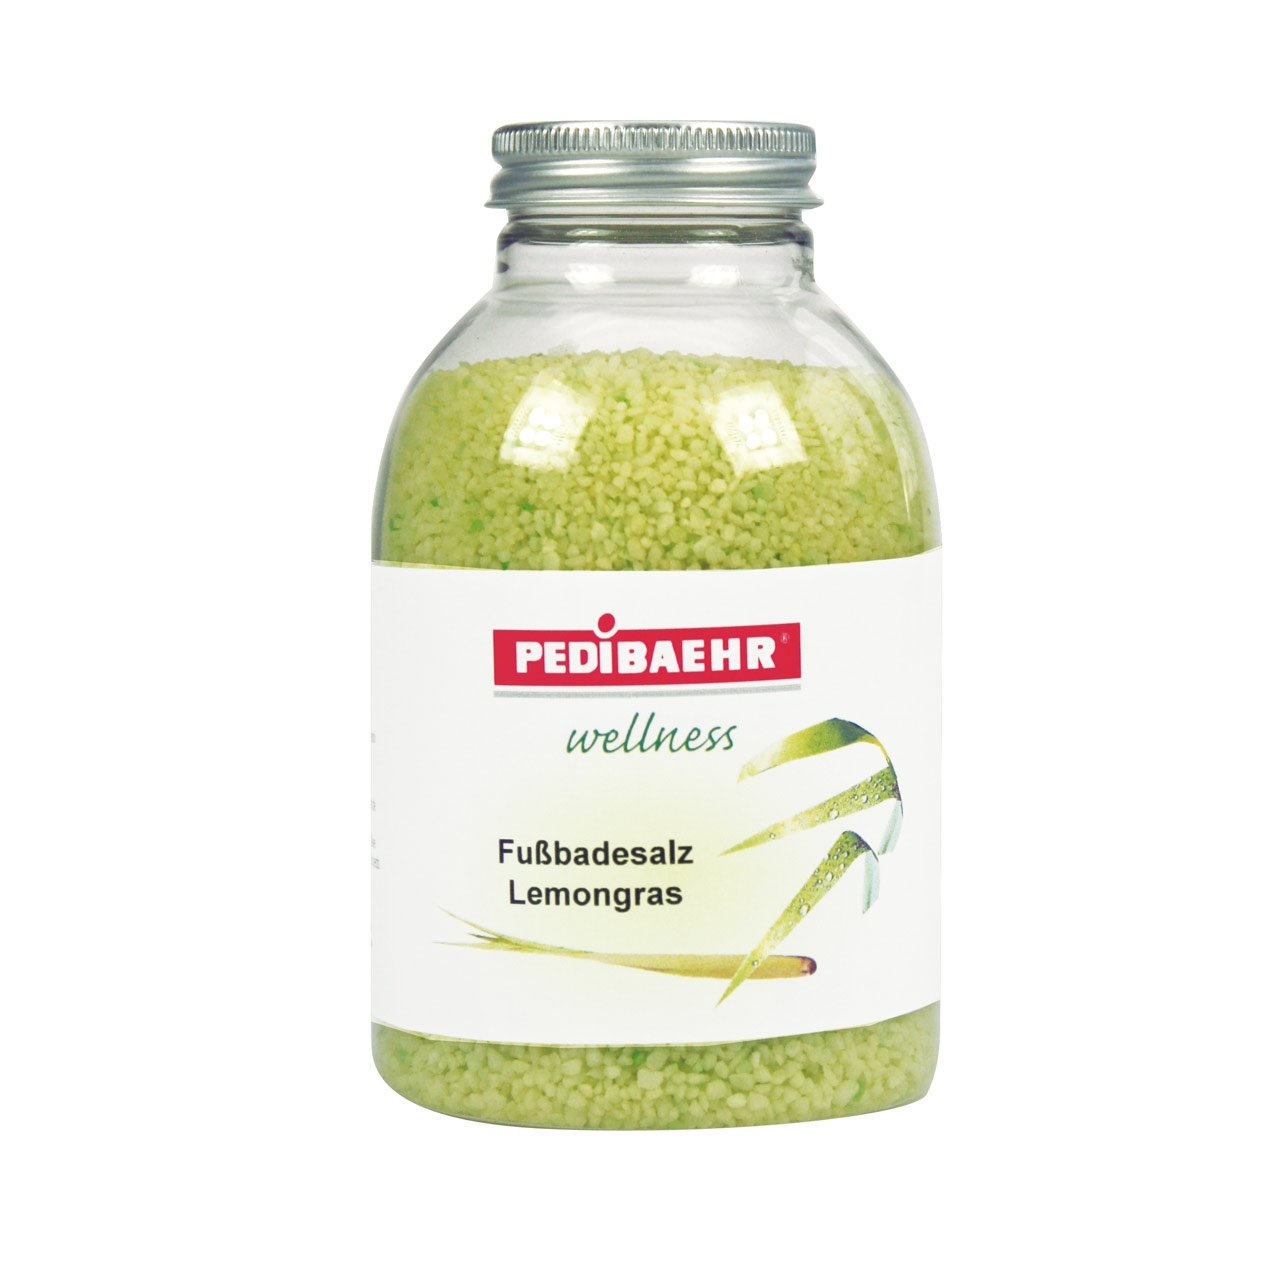 PEDIBAEHR - Wellness Fußbadesalz Lemongras, 575g